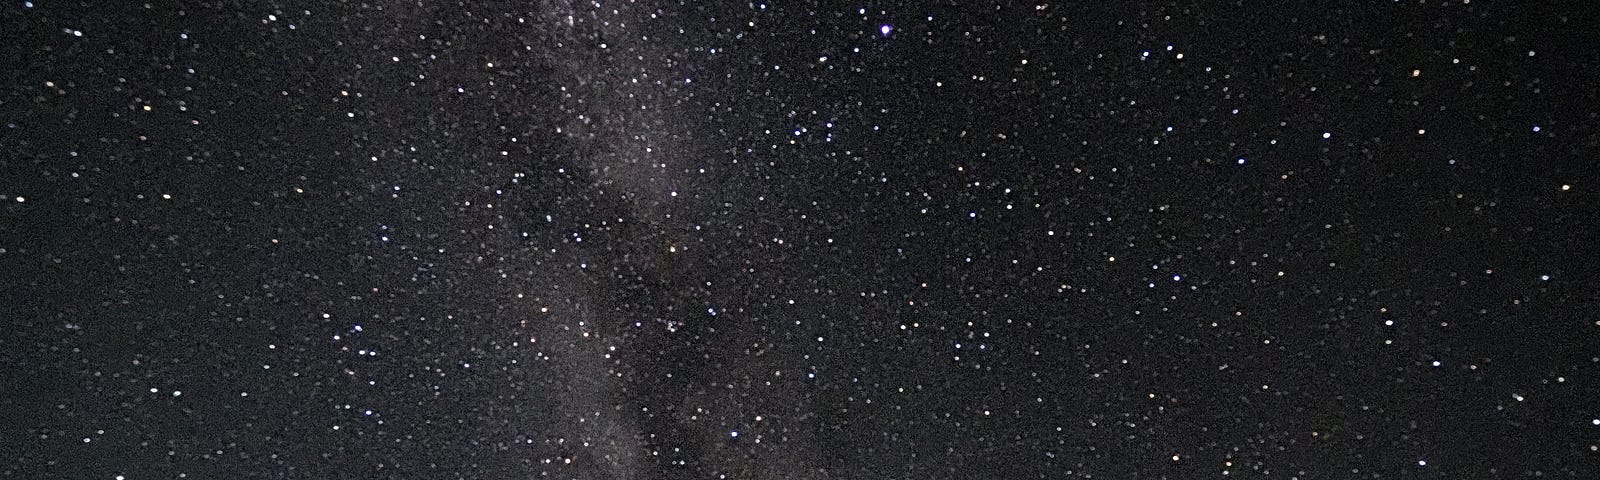 The Milky Way as seen from Traeth Llanddwyn, Anglesey, UK